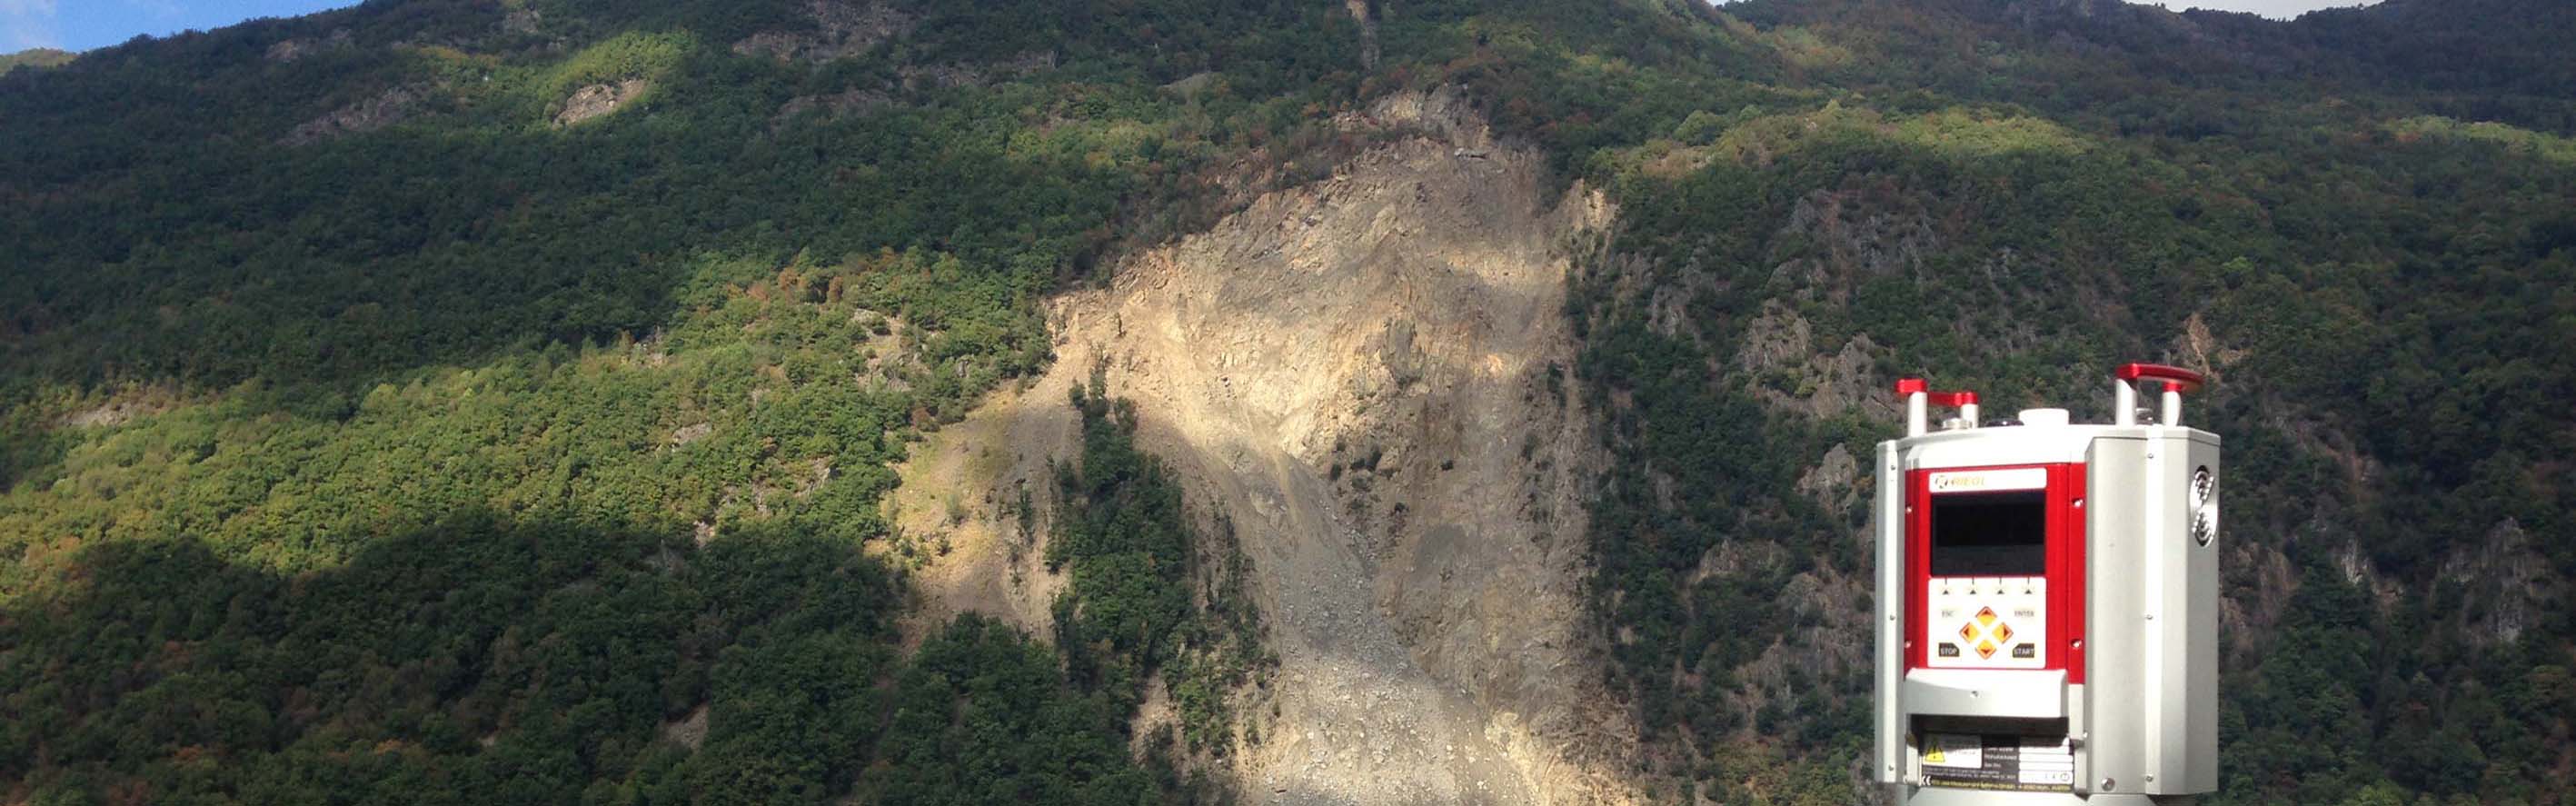 Séchilienne landslide: topographic monitoring with a long-range terrestrial laser scanner